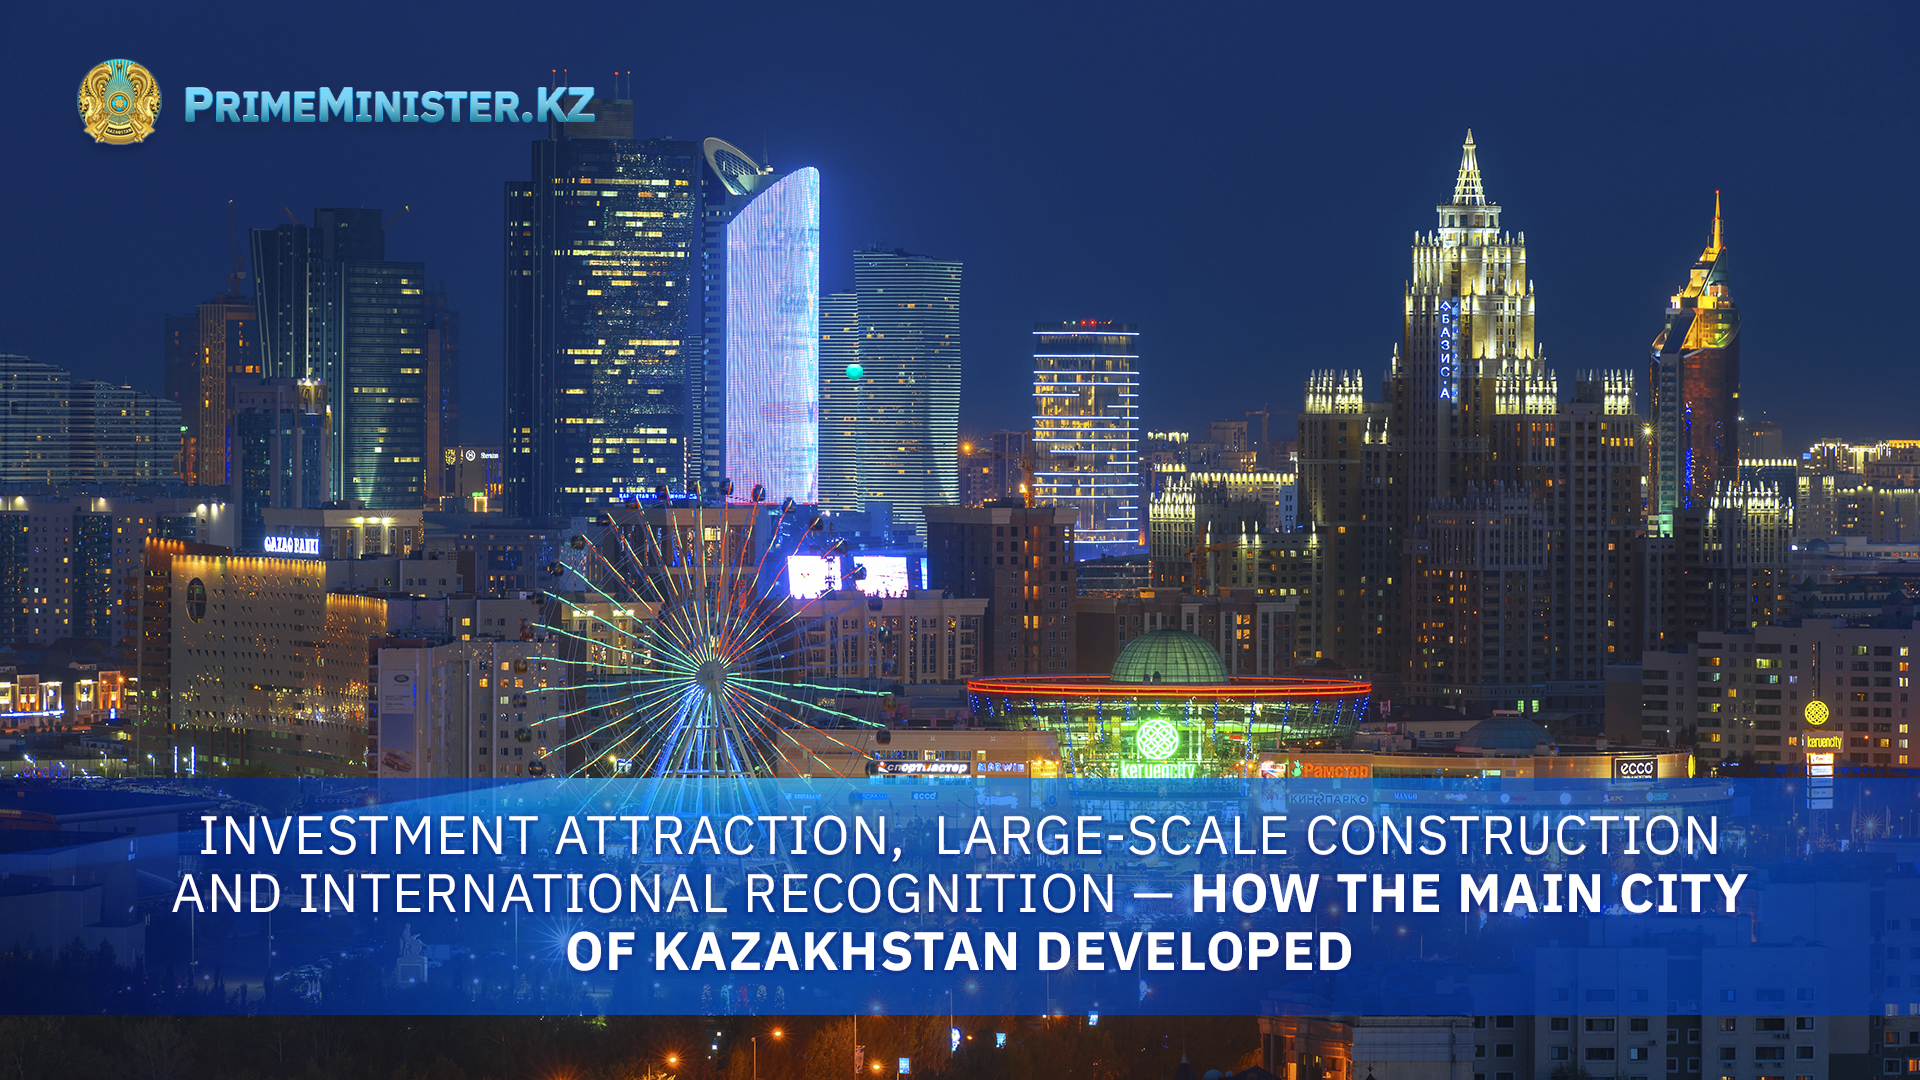 How the main city of Kazakhstan developed